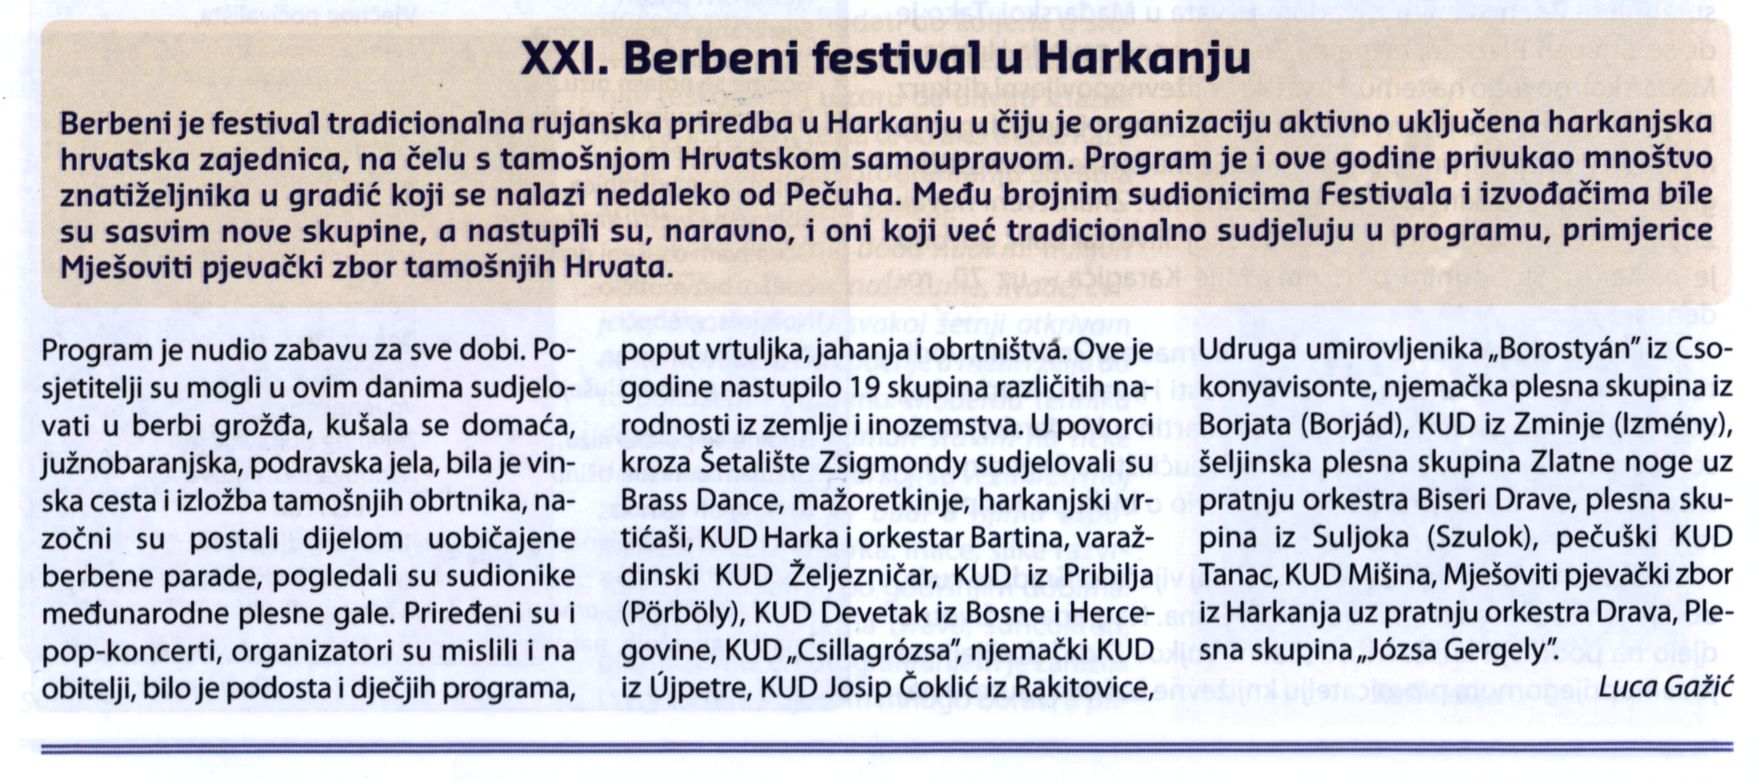 XXI. Barbeni festival u Harkanju